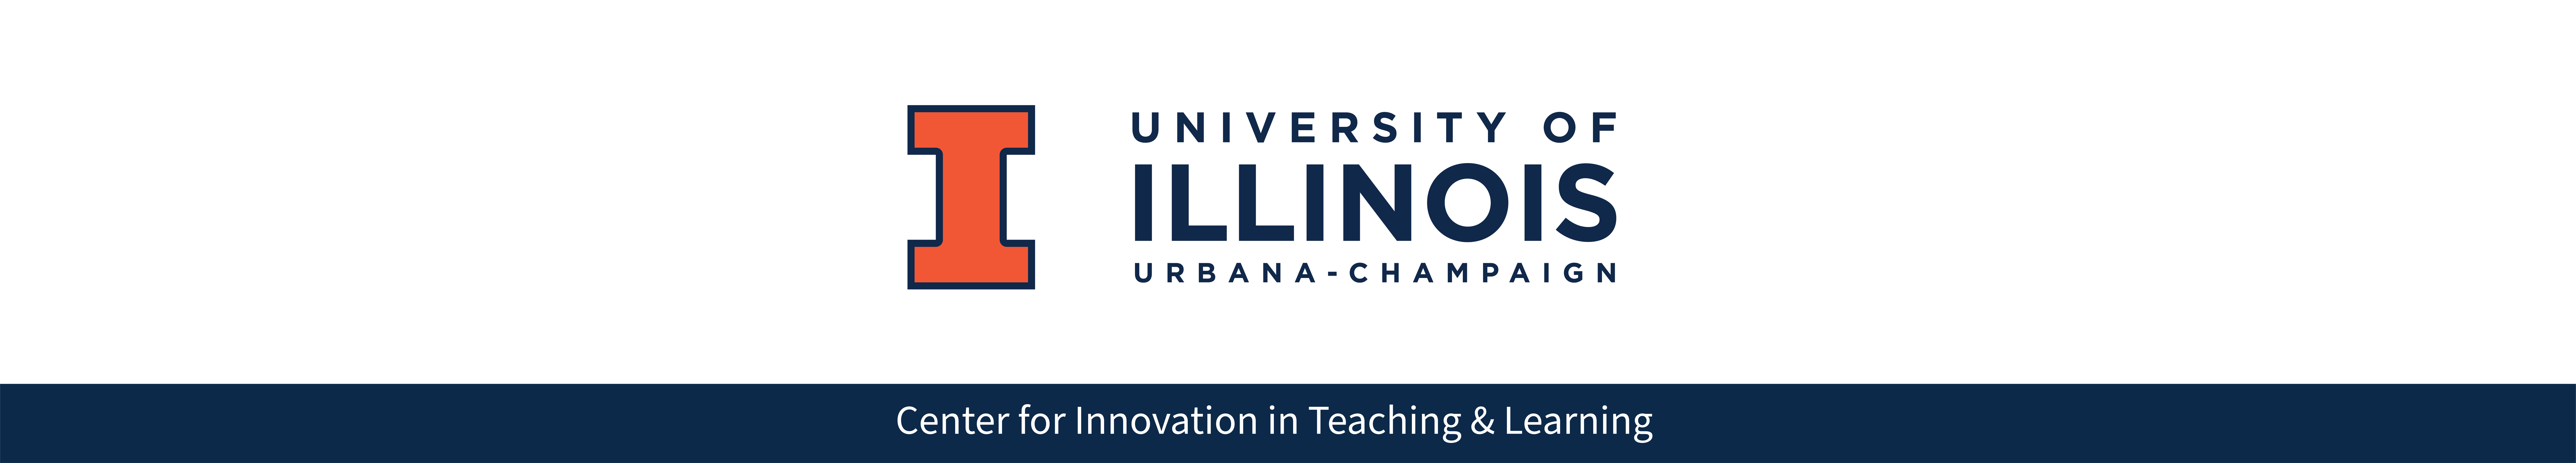 University of Illinois CITL Header image